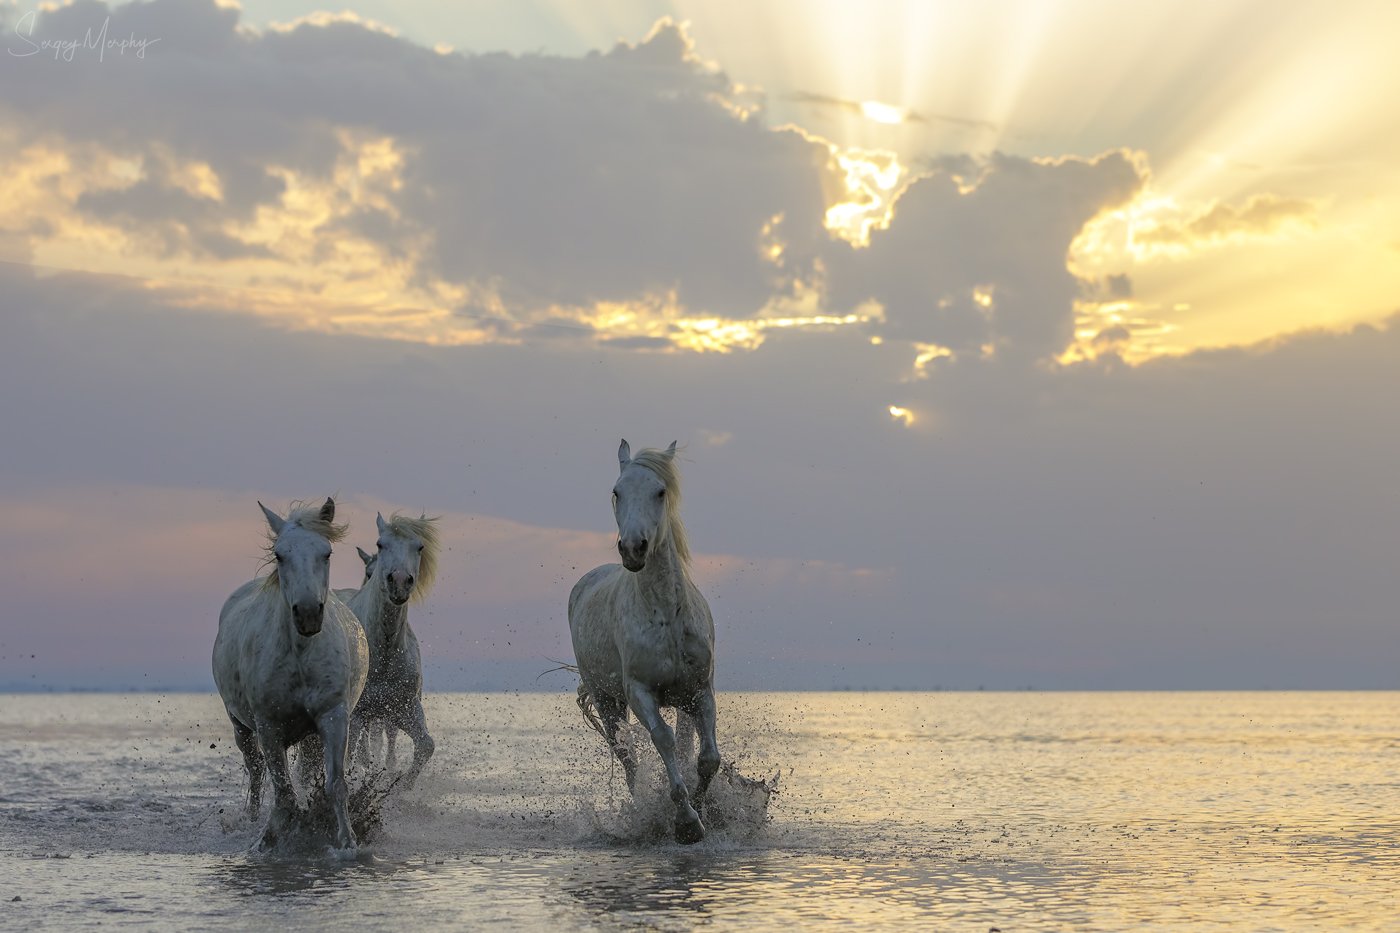 camargue horses, Sergey Merphy